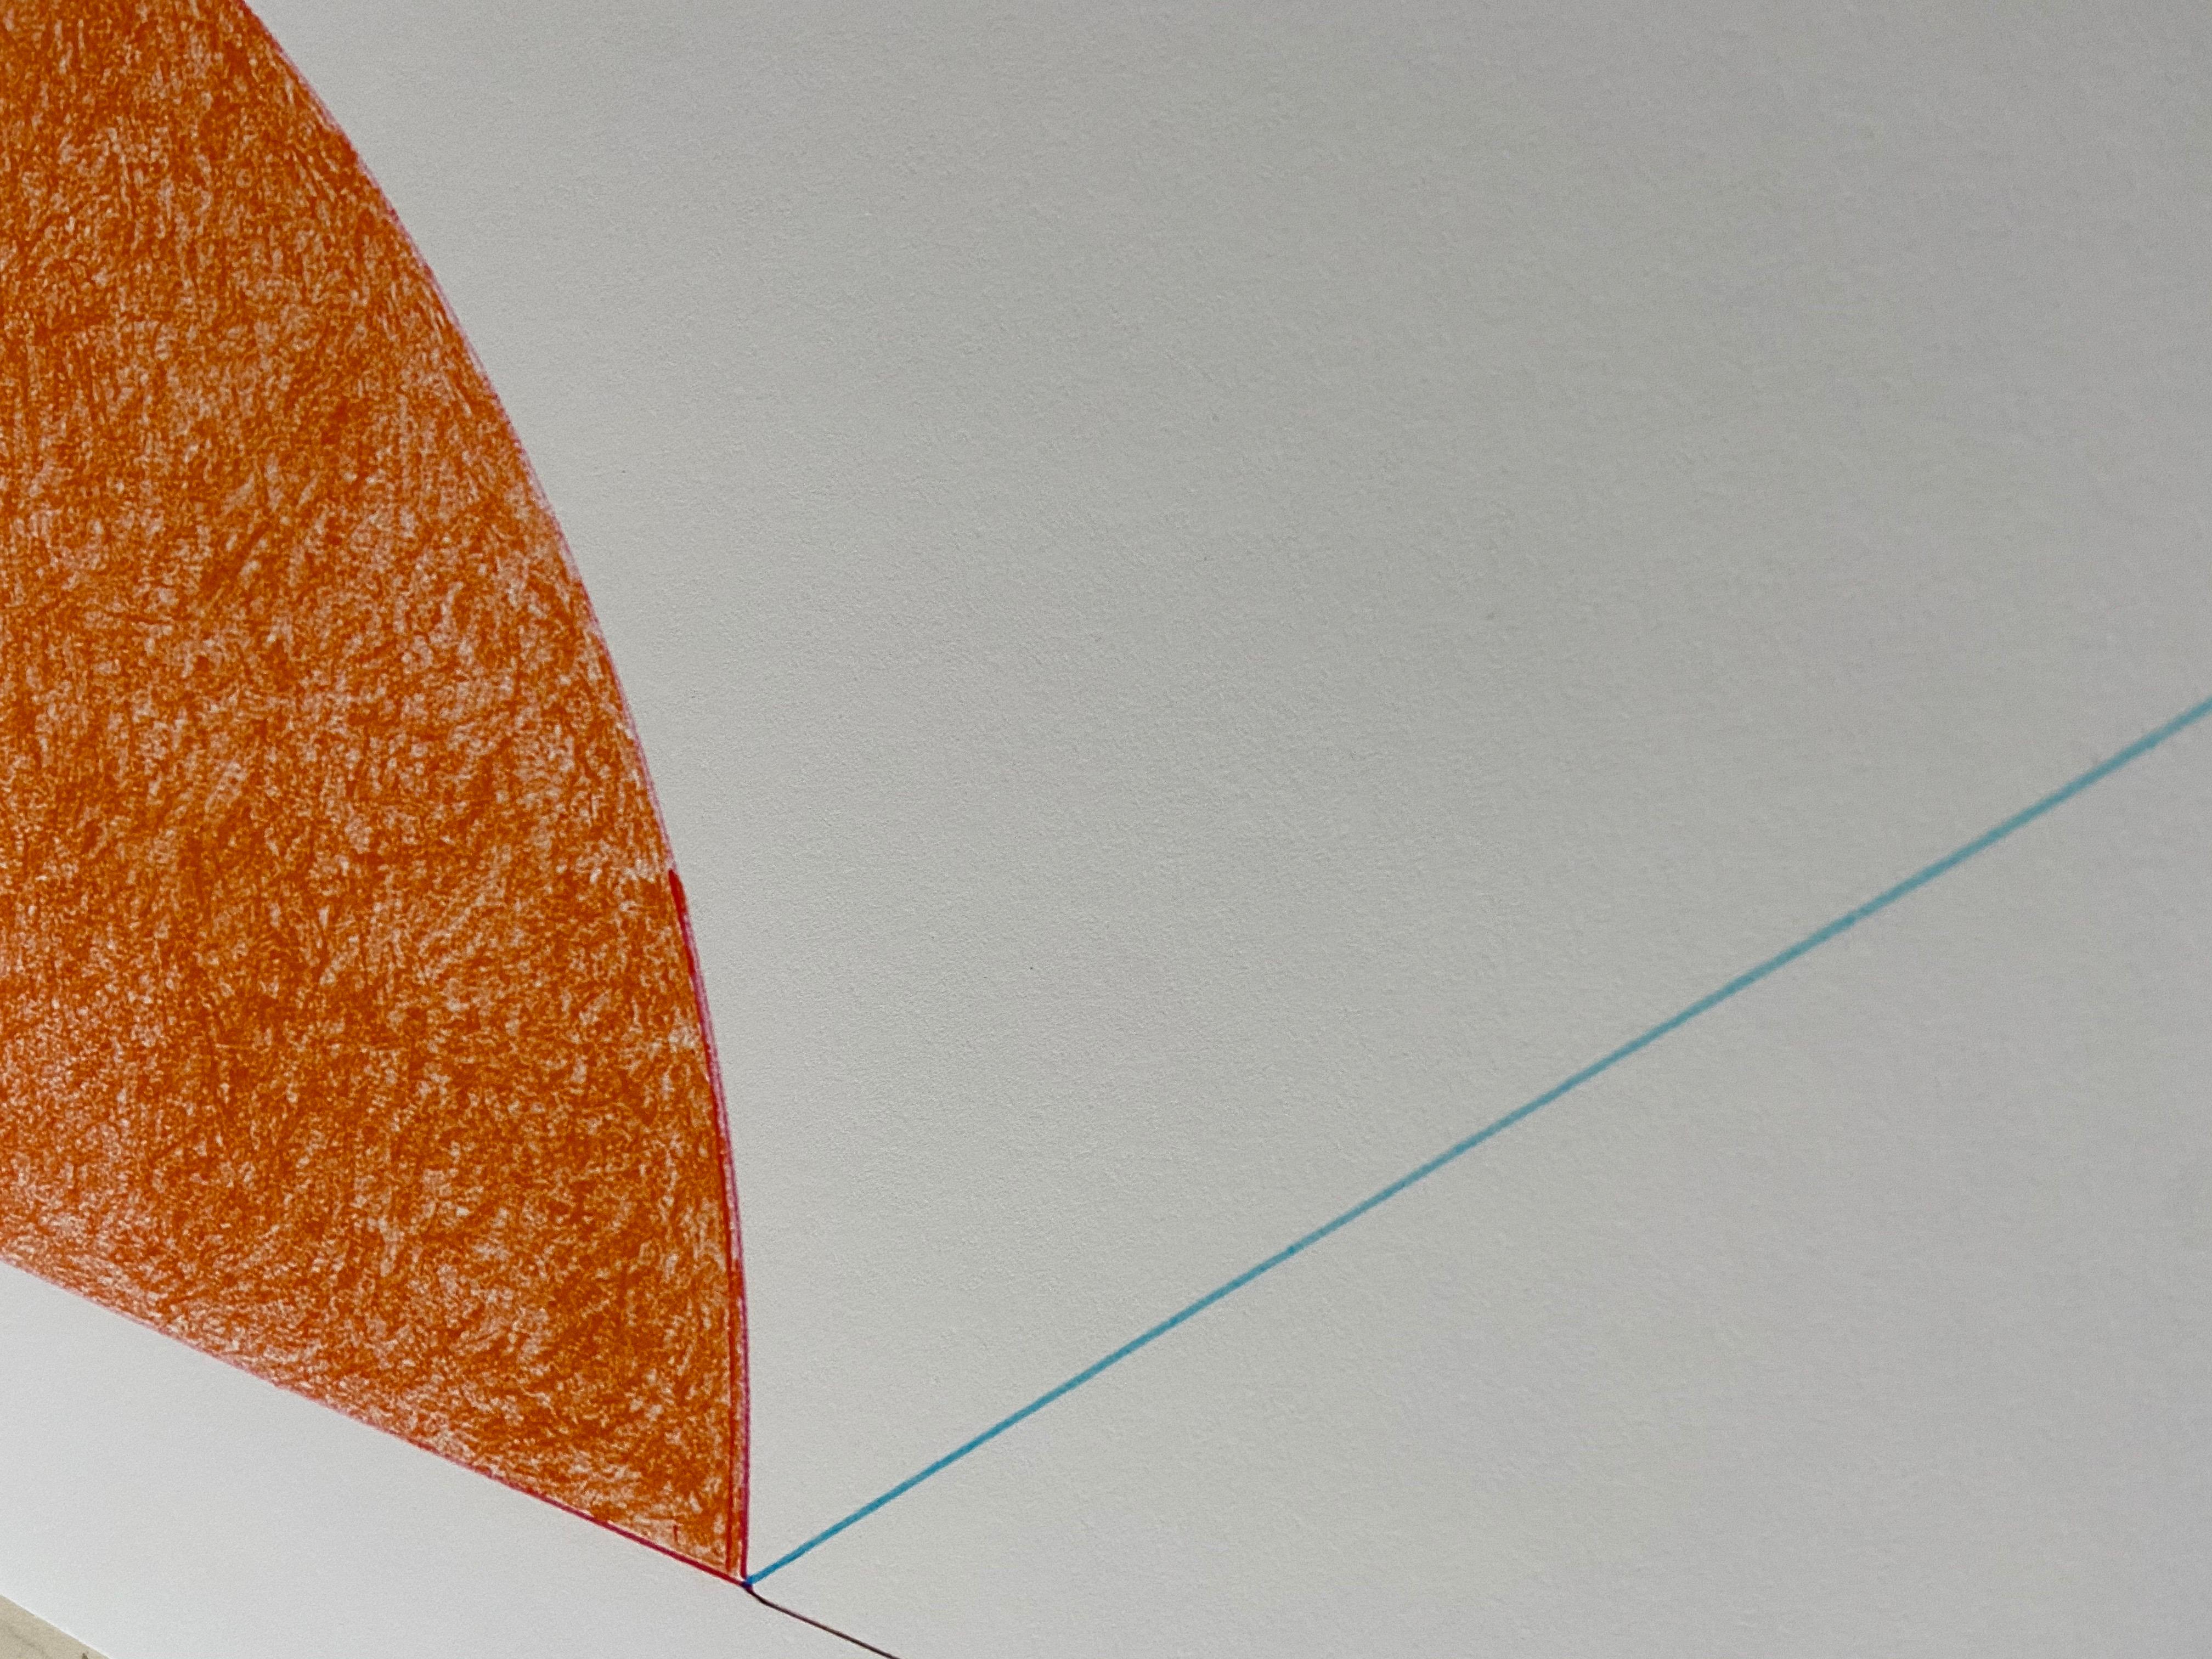 Gottfried Honegger  Composition 2 (orange, black and light blue)   2015  For Sale 2